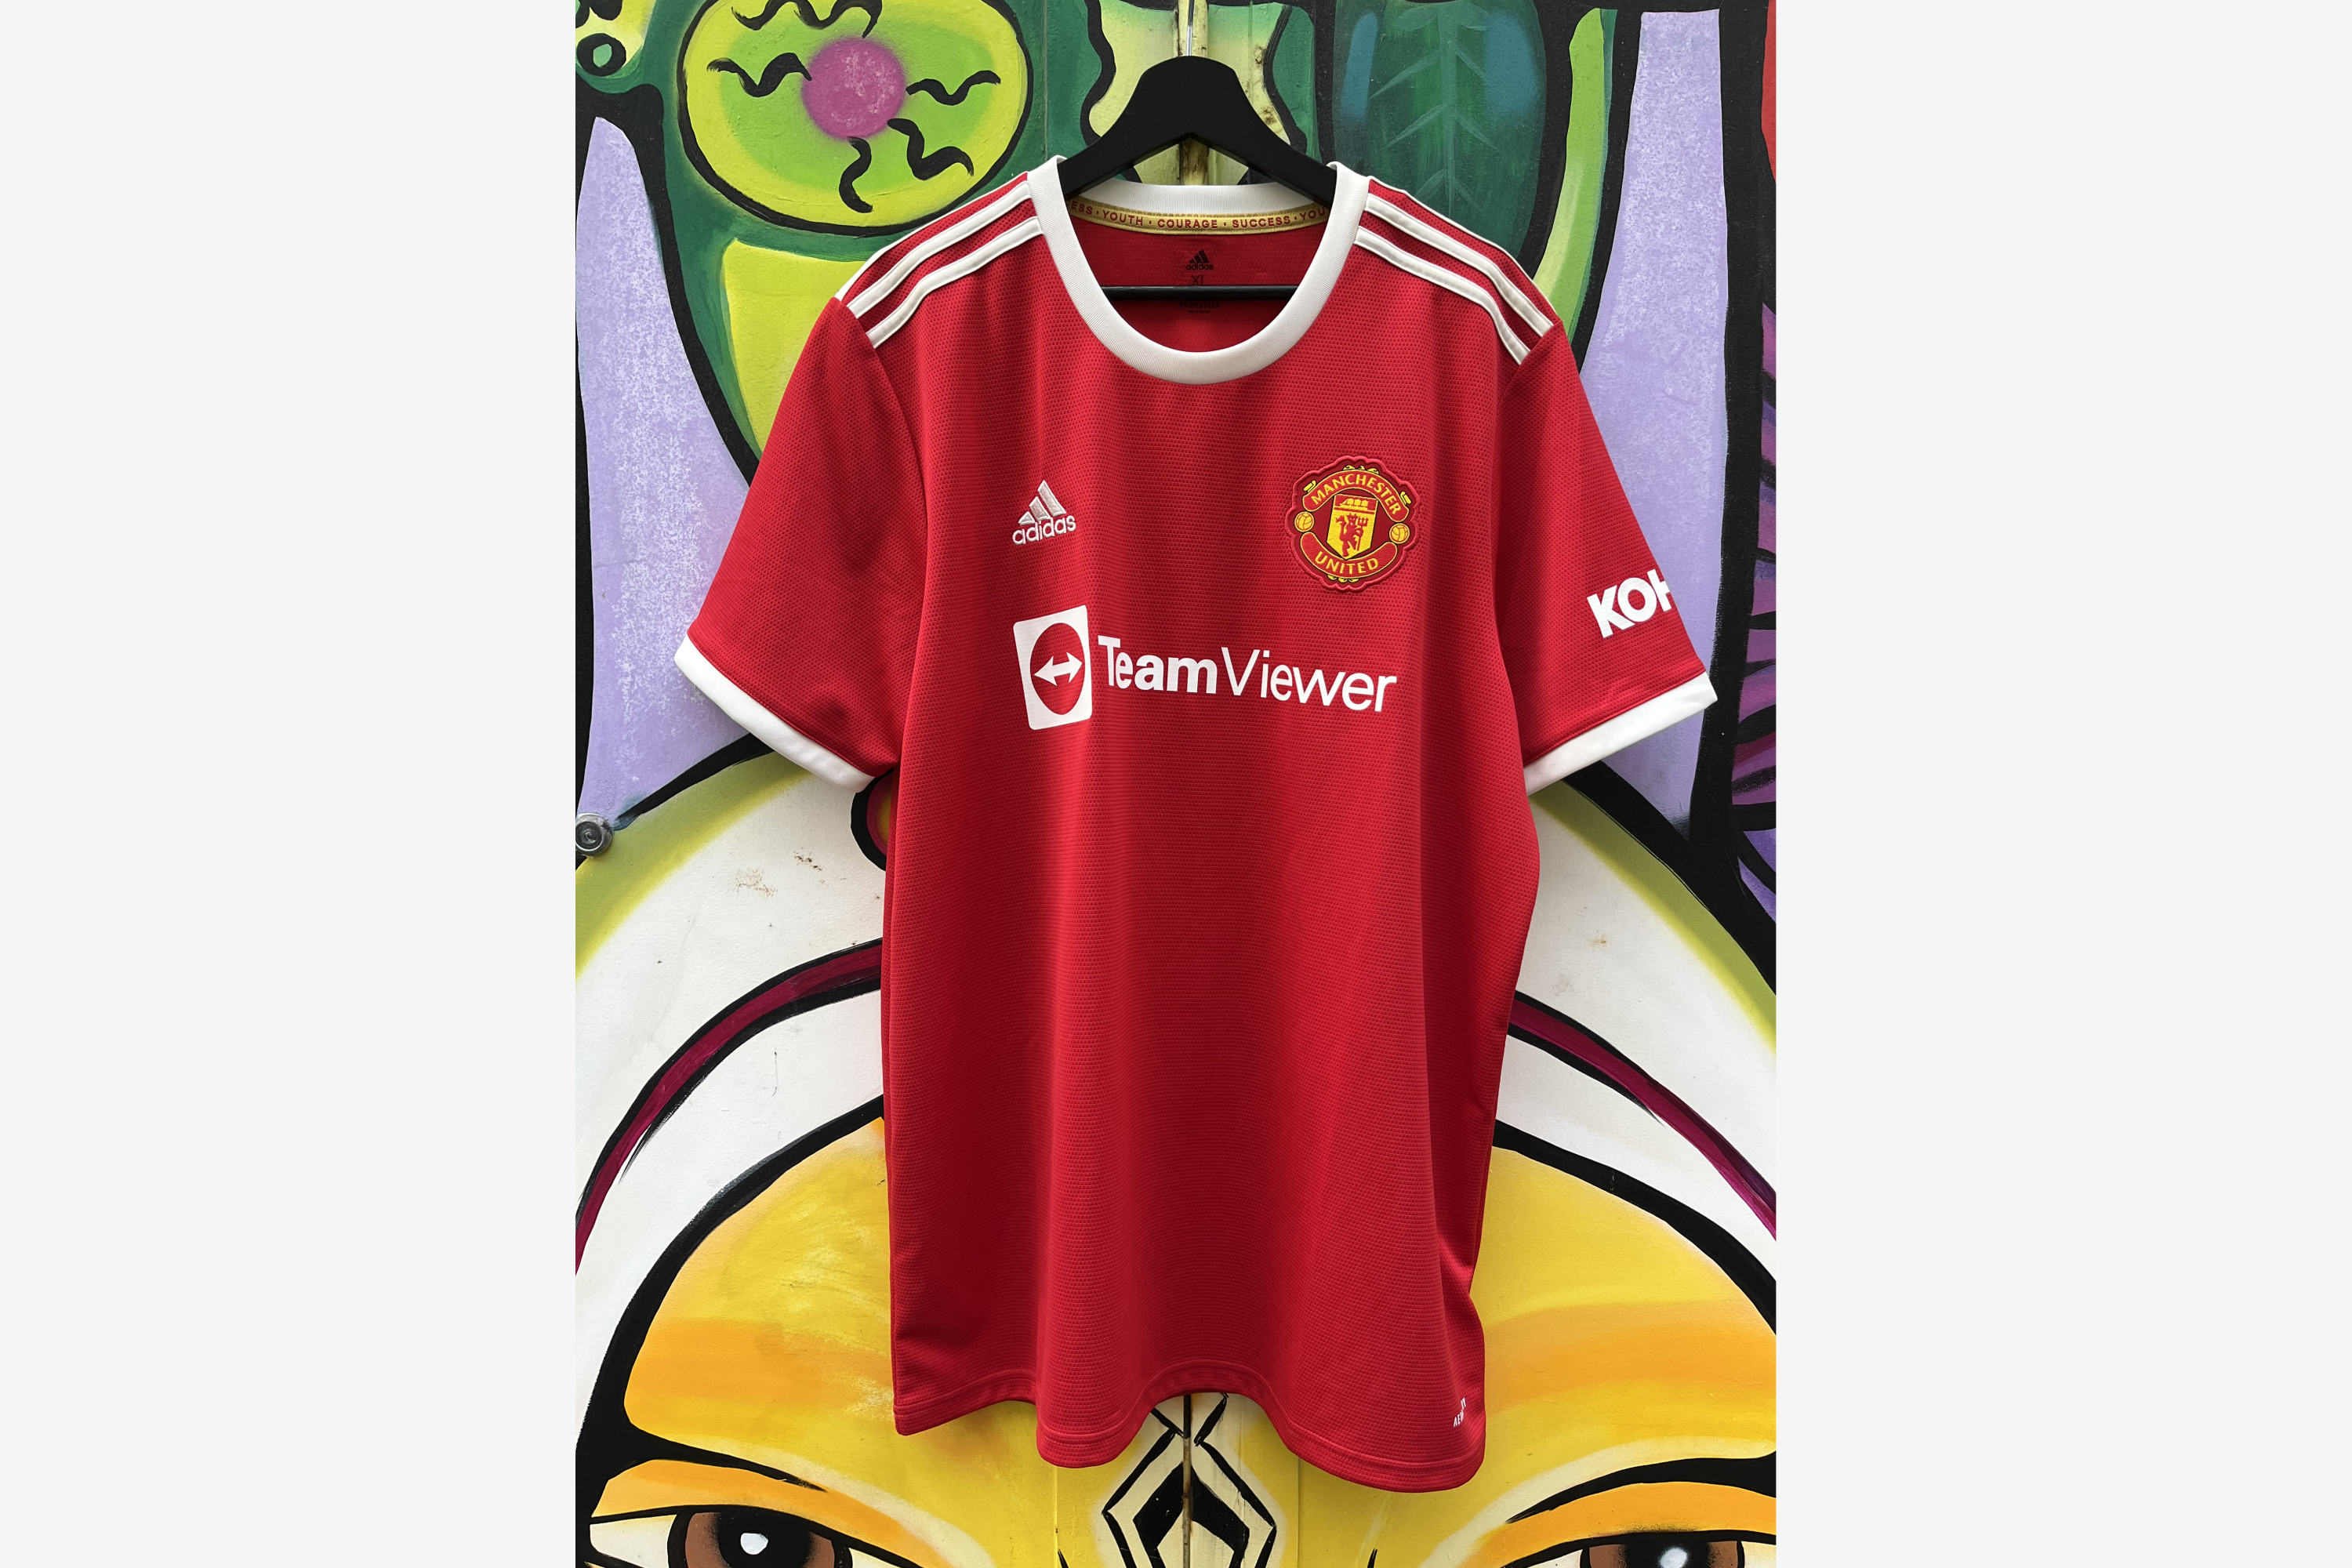 Adidas - Manchester United 2021/22 Home Football Shirt